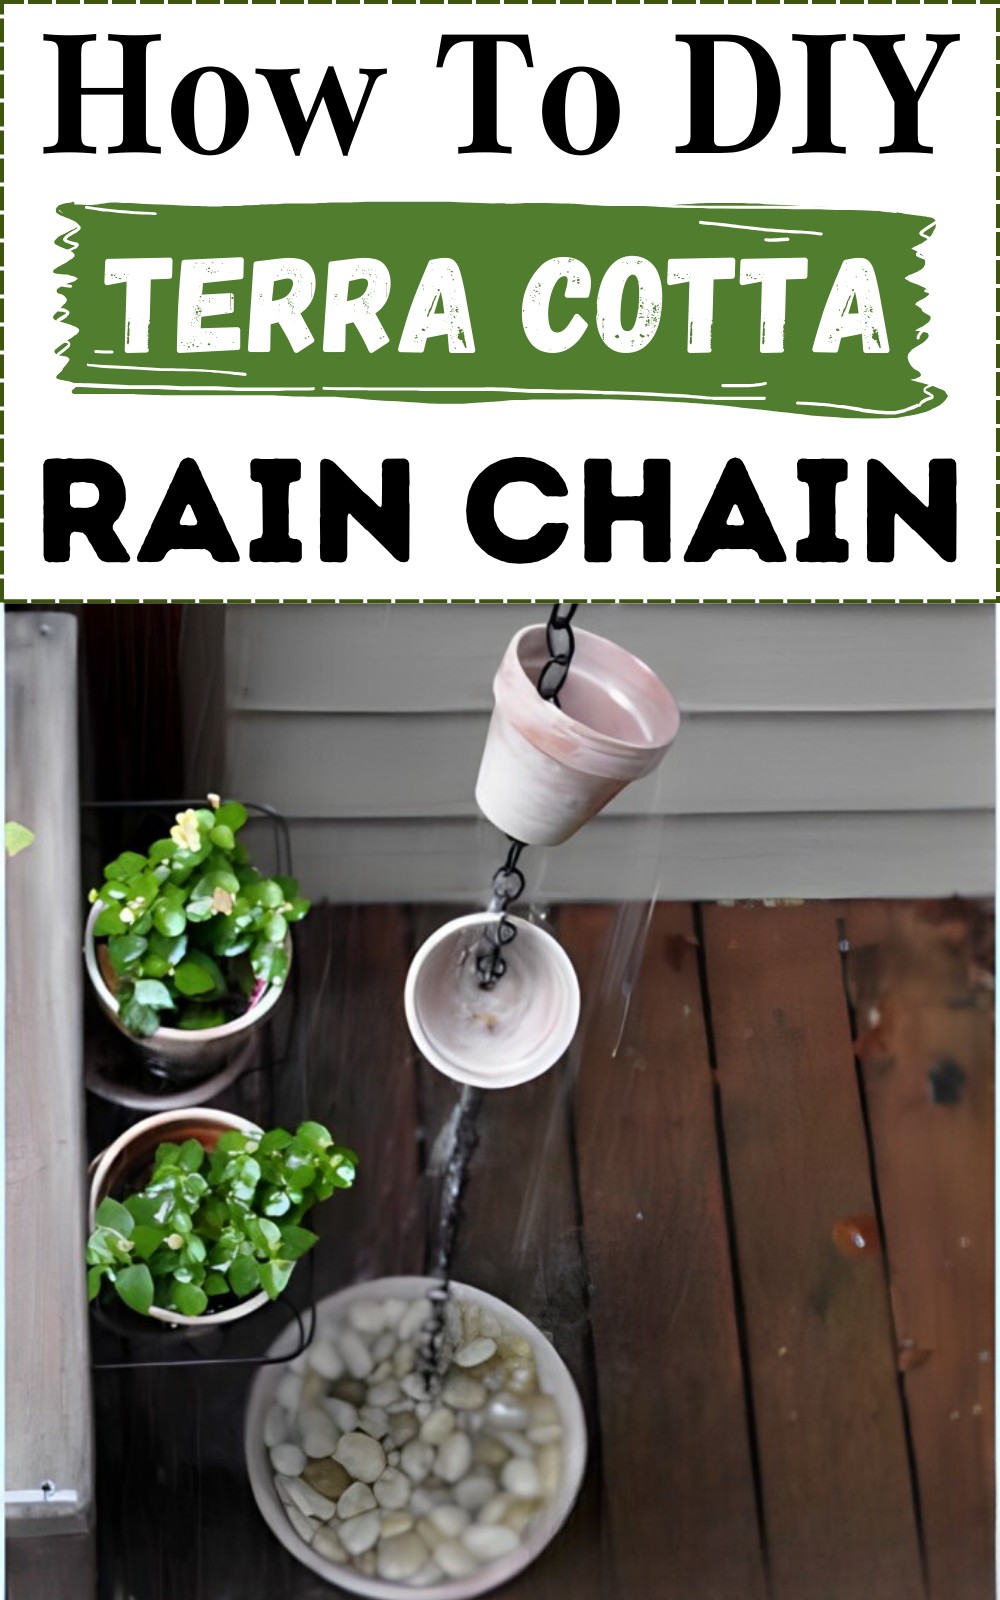 How To DIY Terra Cotta Rain Chain